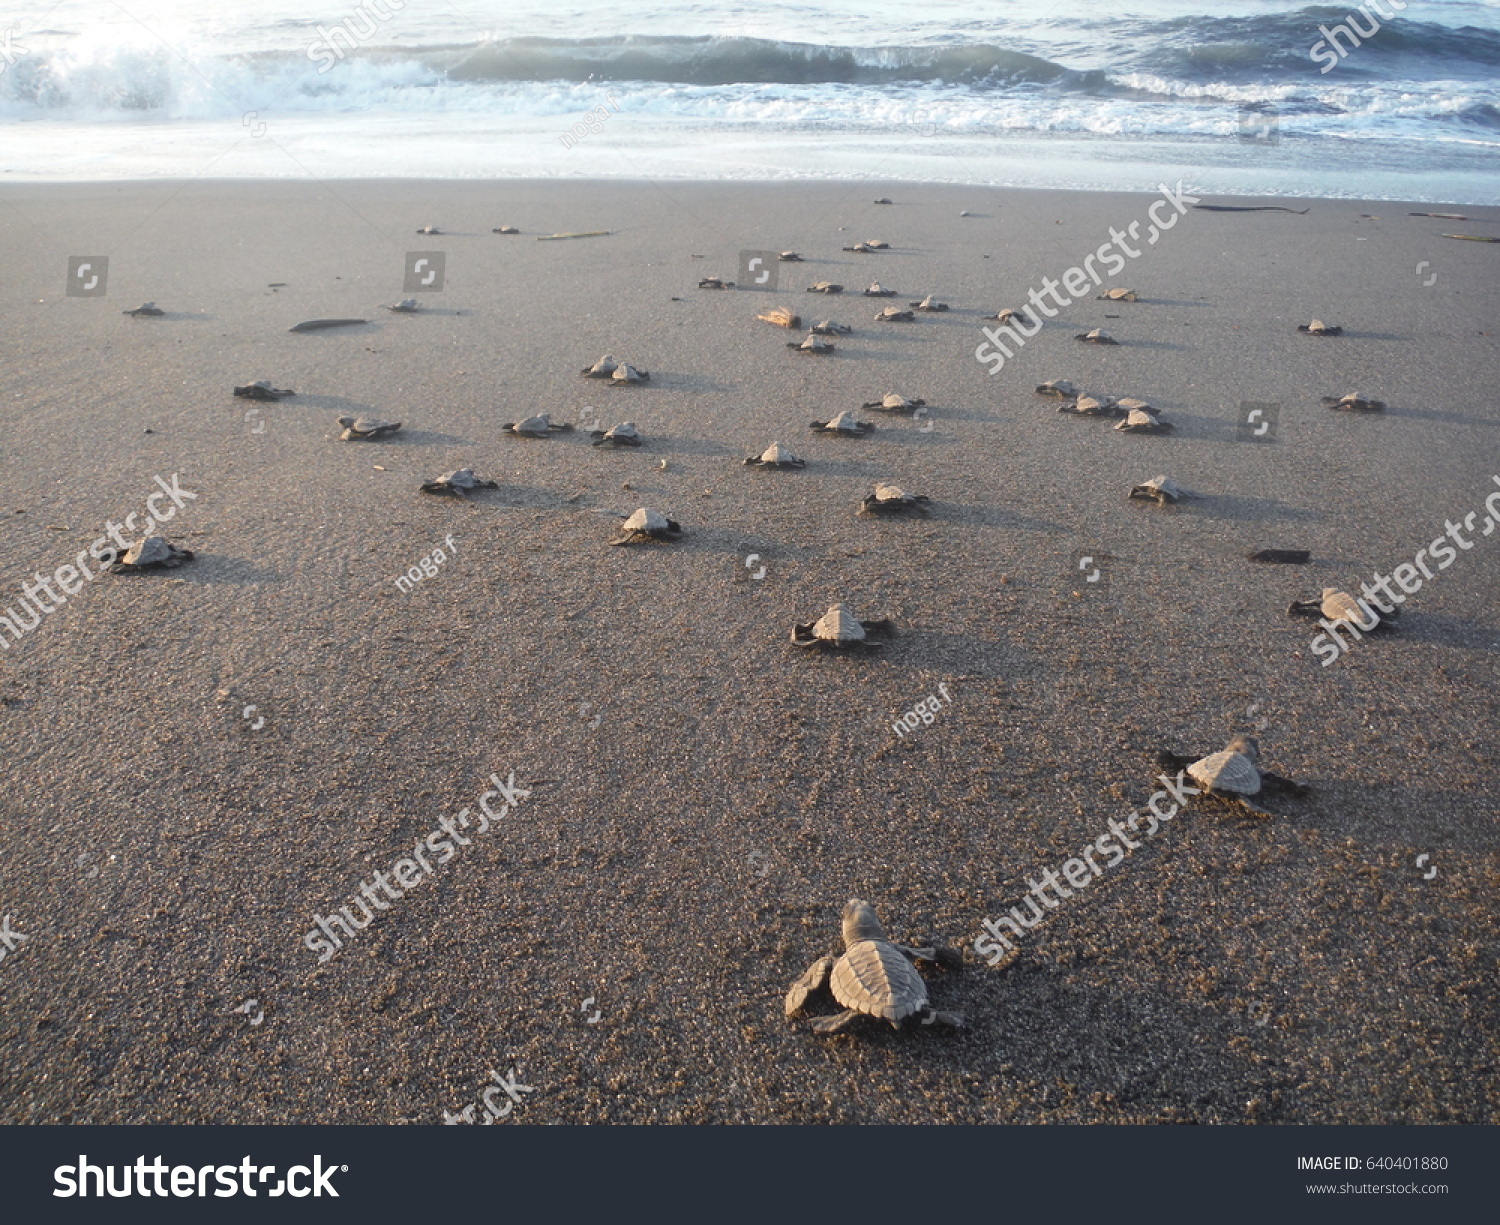 baby turtles walking towards the ocean after hatching, EL PAREDON, GUATEMALA, October 2015 #640401880